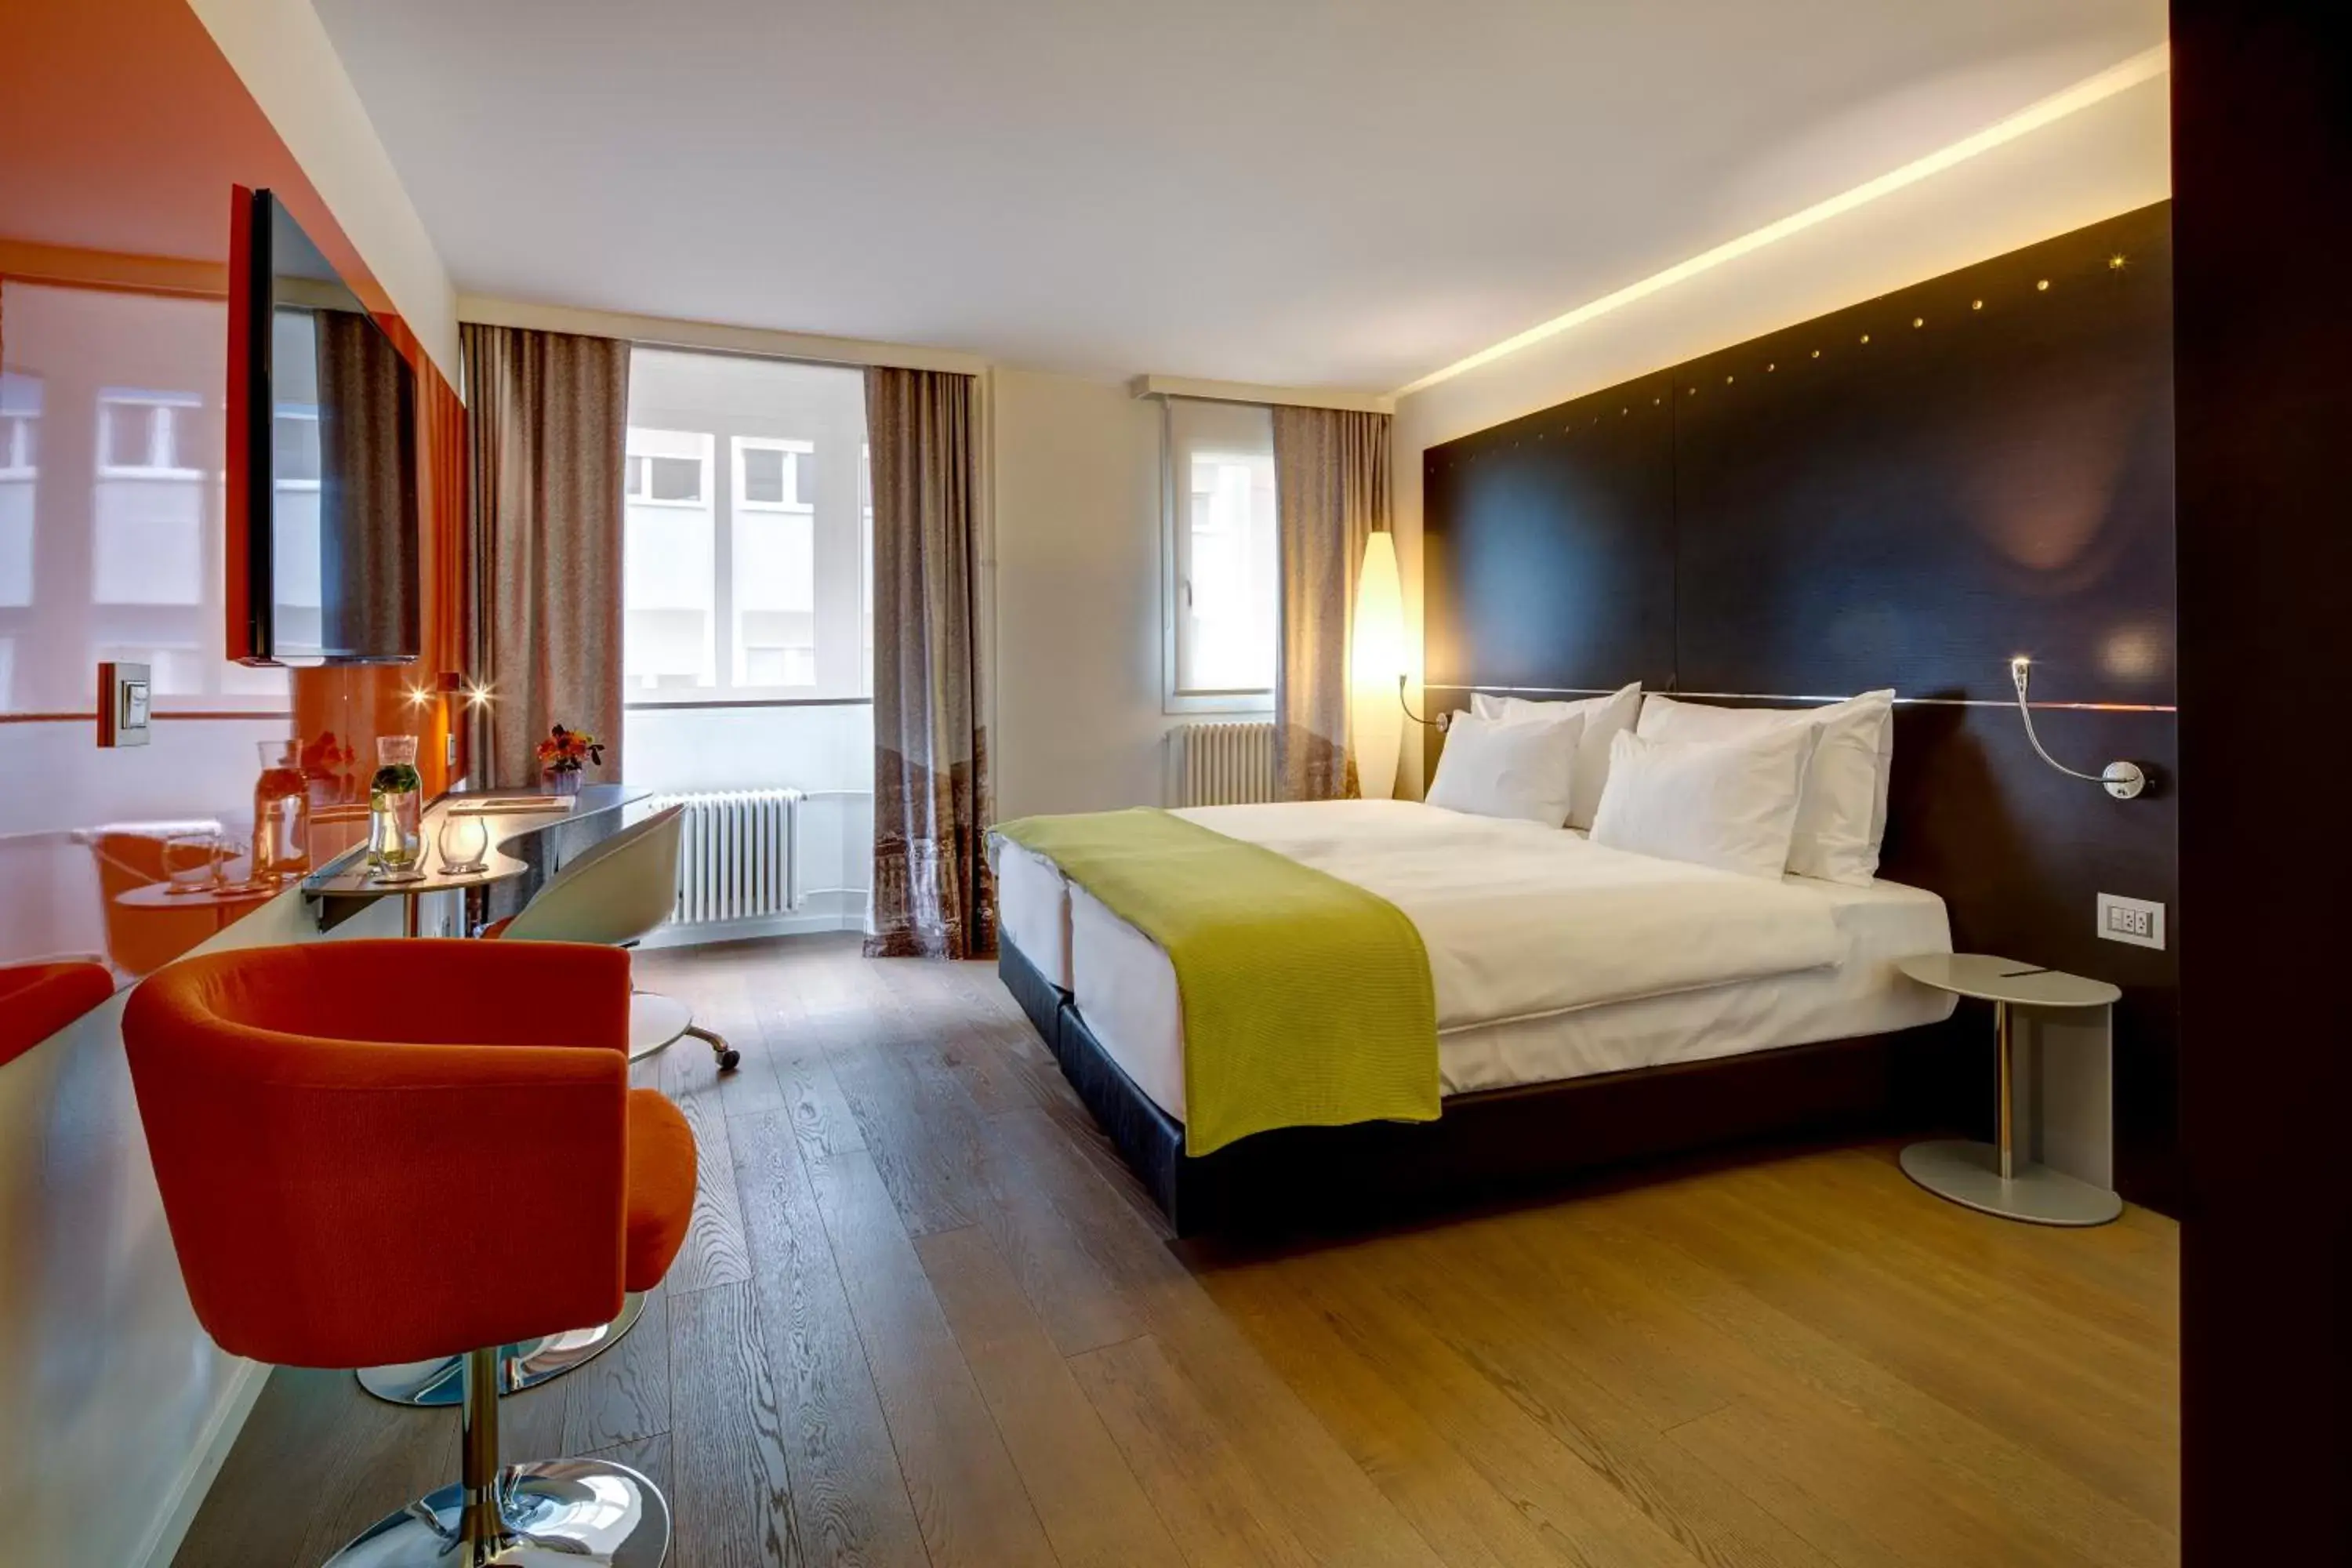 Bed in Design Hotel f6